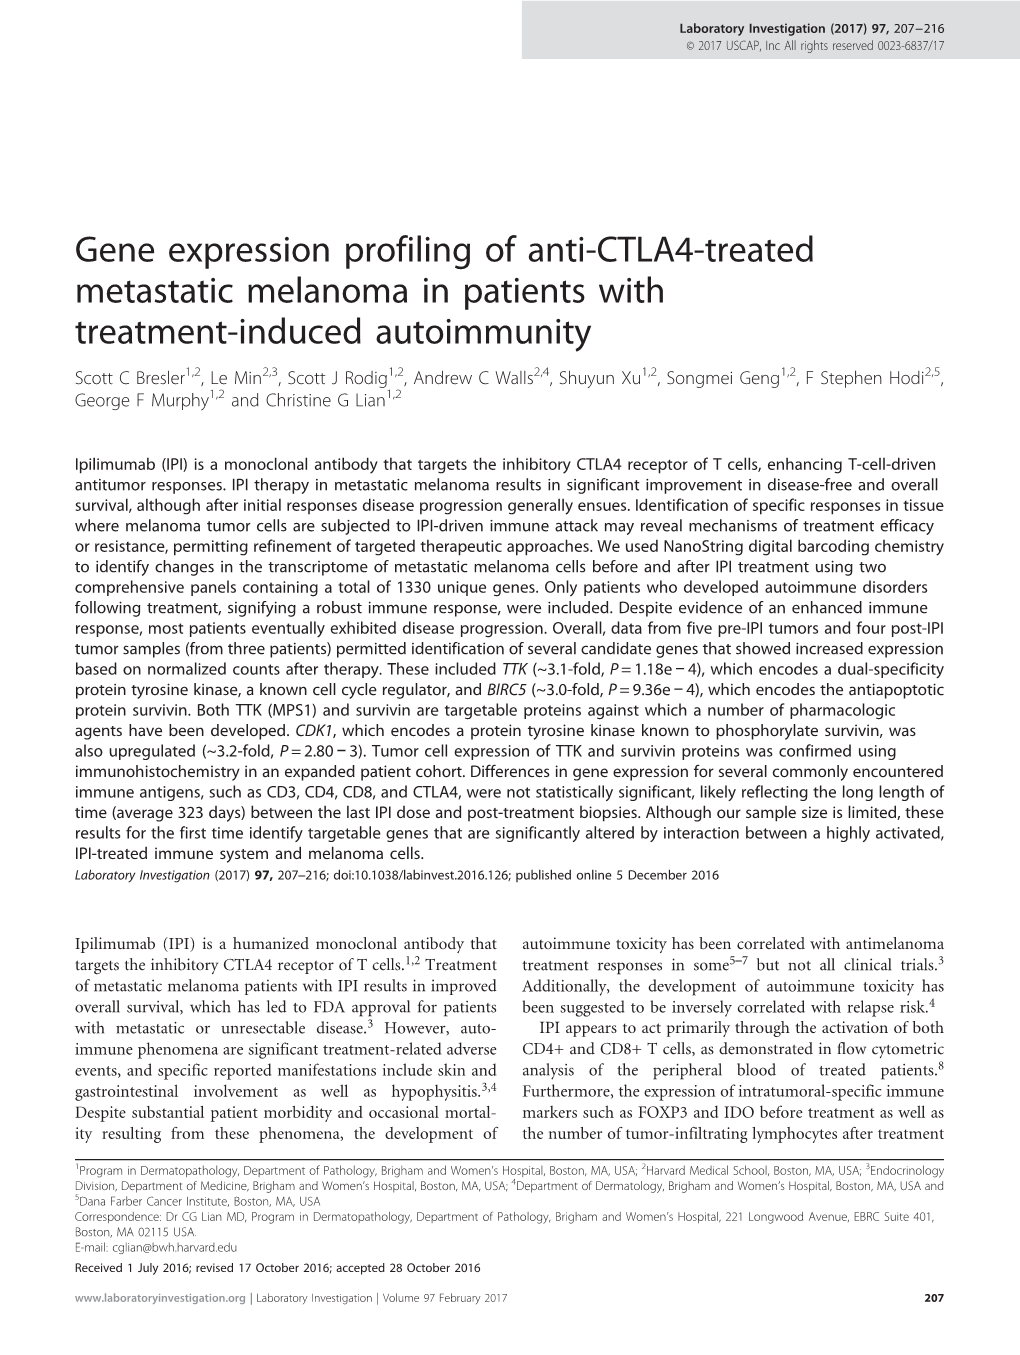 Gene Expression Profiling of Anti-CTLA4-Treated Metastatic